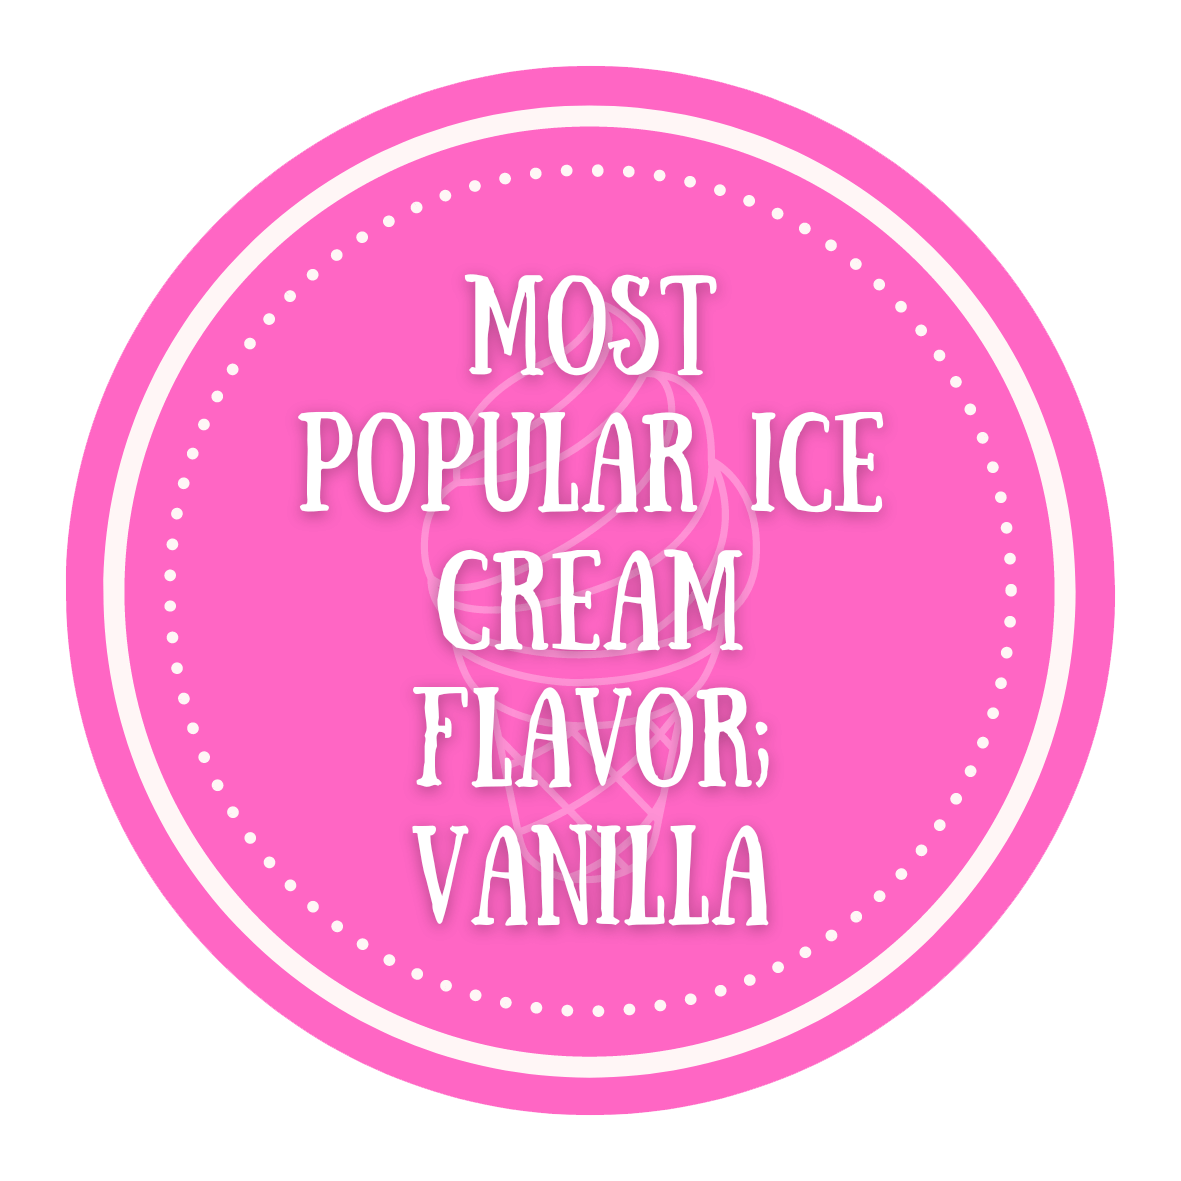 Most popular ice cream flavor: vanilla